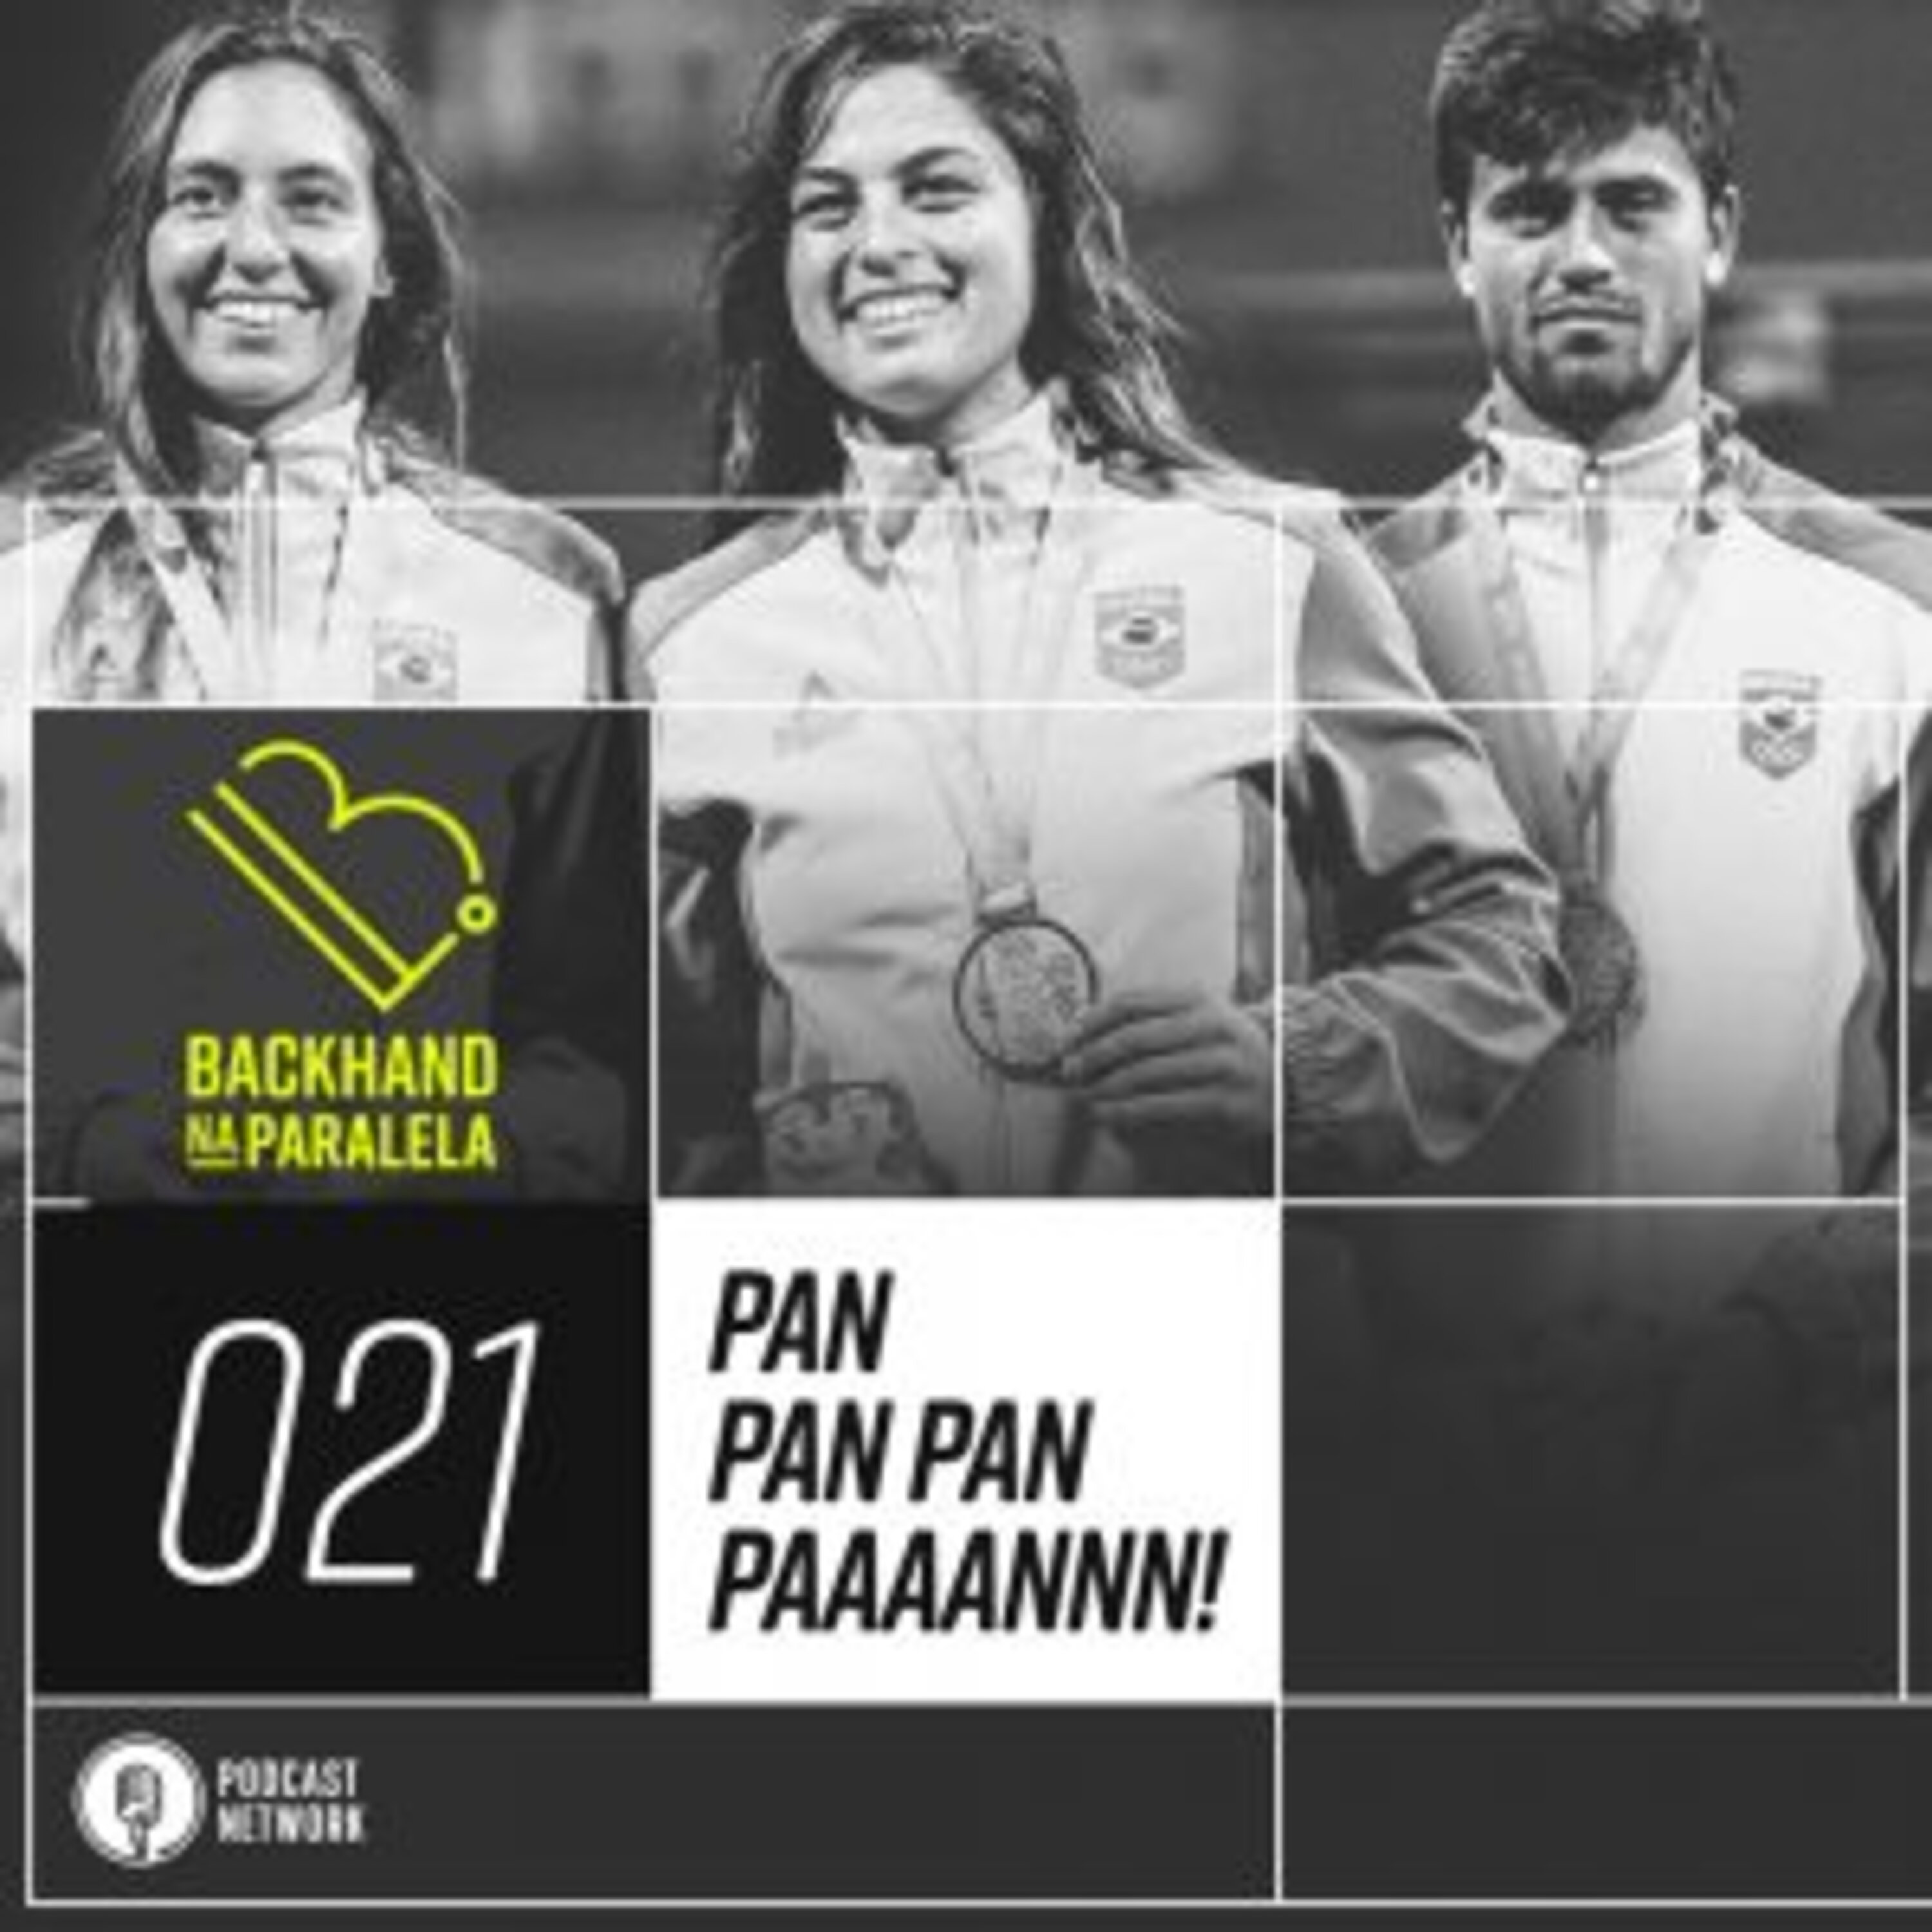 Backhand na Paralela 021 – Pan Pan Pan PAAAAANNNN!